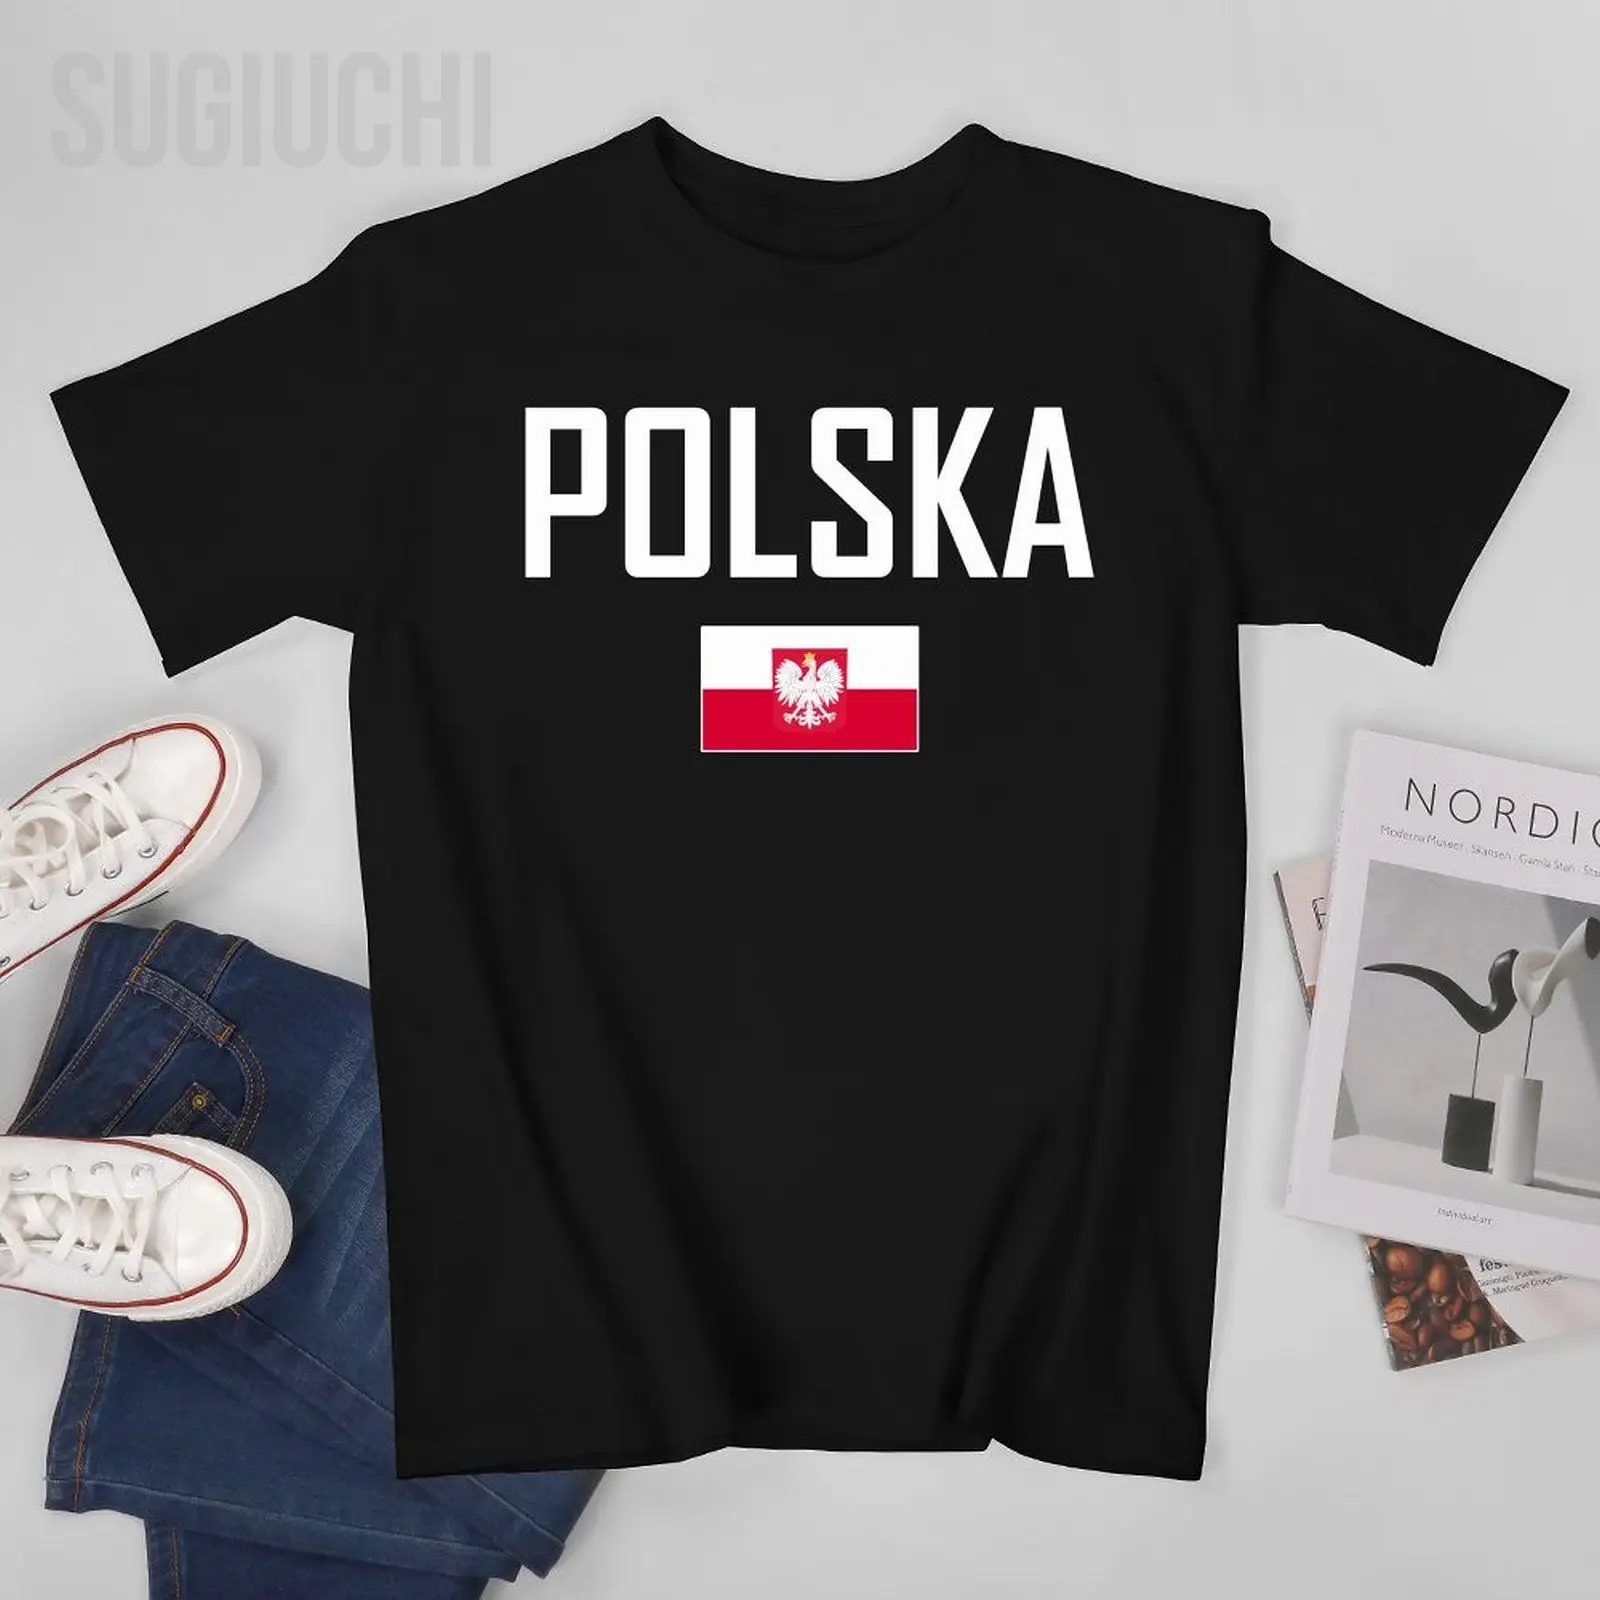 

Unisex Men Tshirt Poland POLSKA Flag And Font Tees T-Shirt O-neck T Shirts Women Boys 100% Cotton Clothing More Color